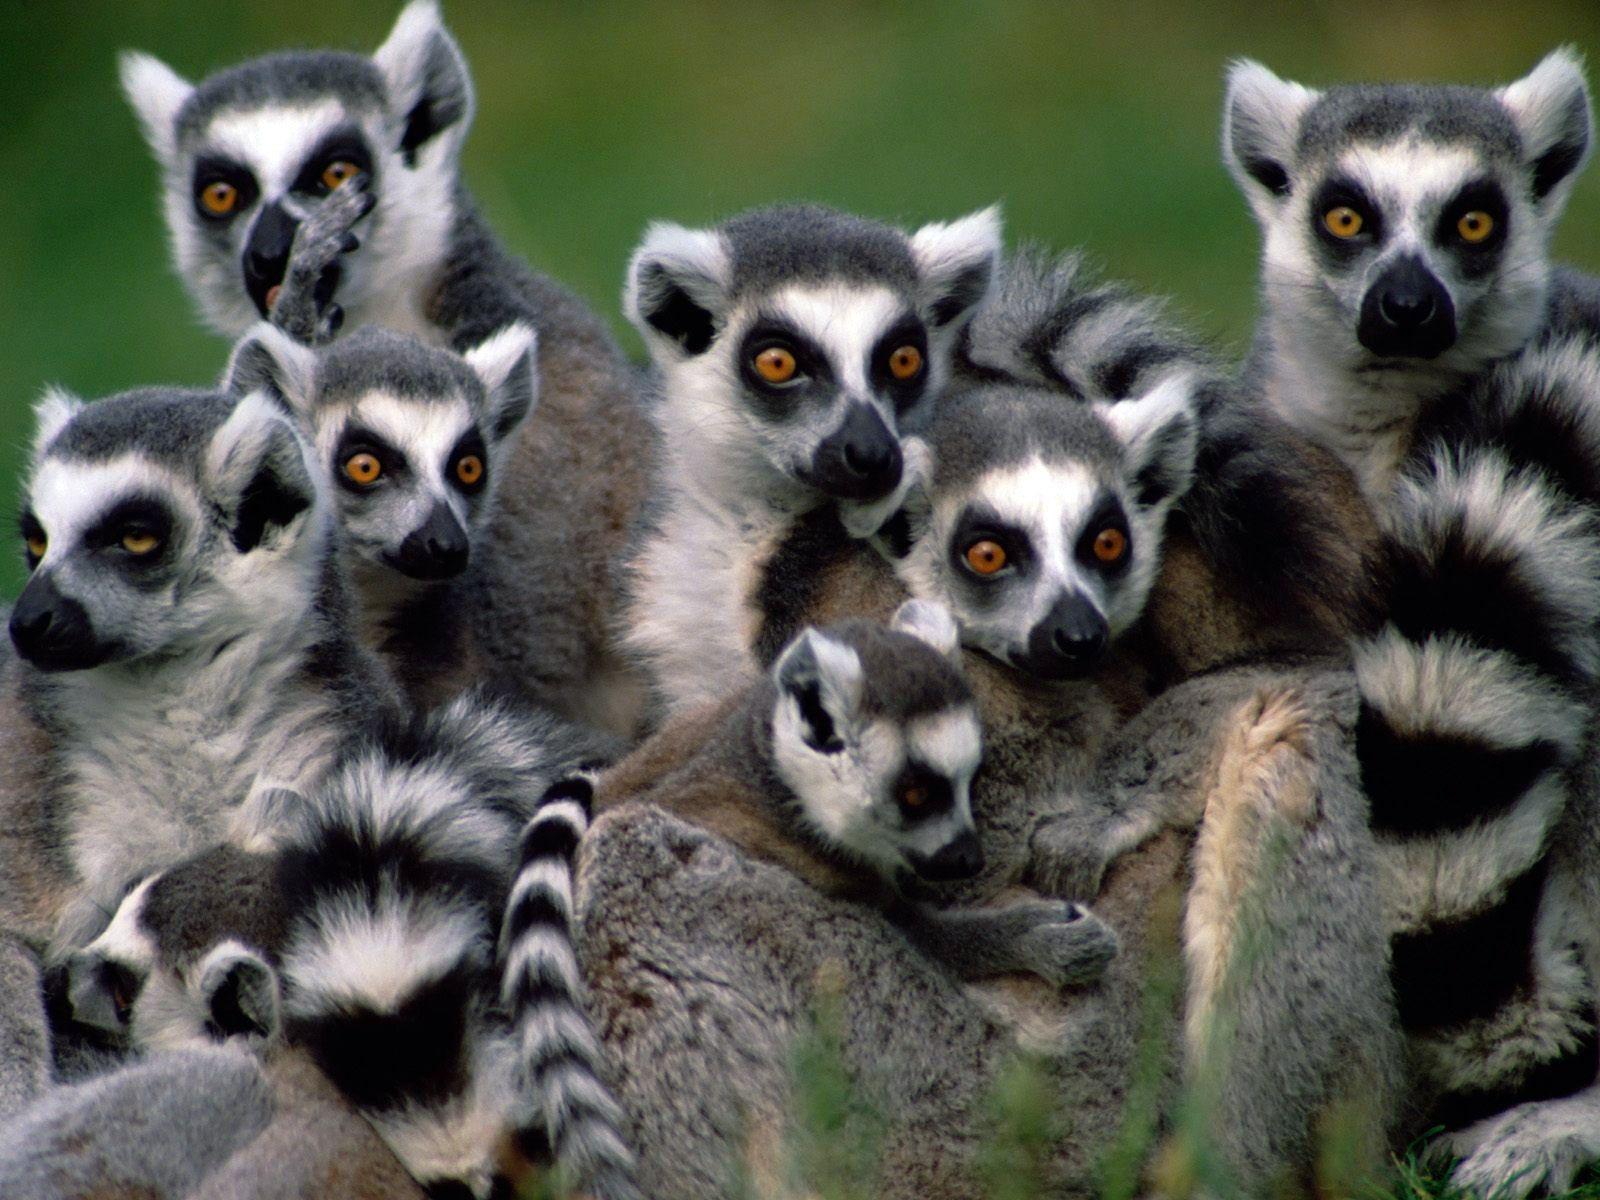 Lemurs image Madagascar Lemurs HD wallpaper and background photo